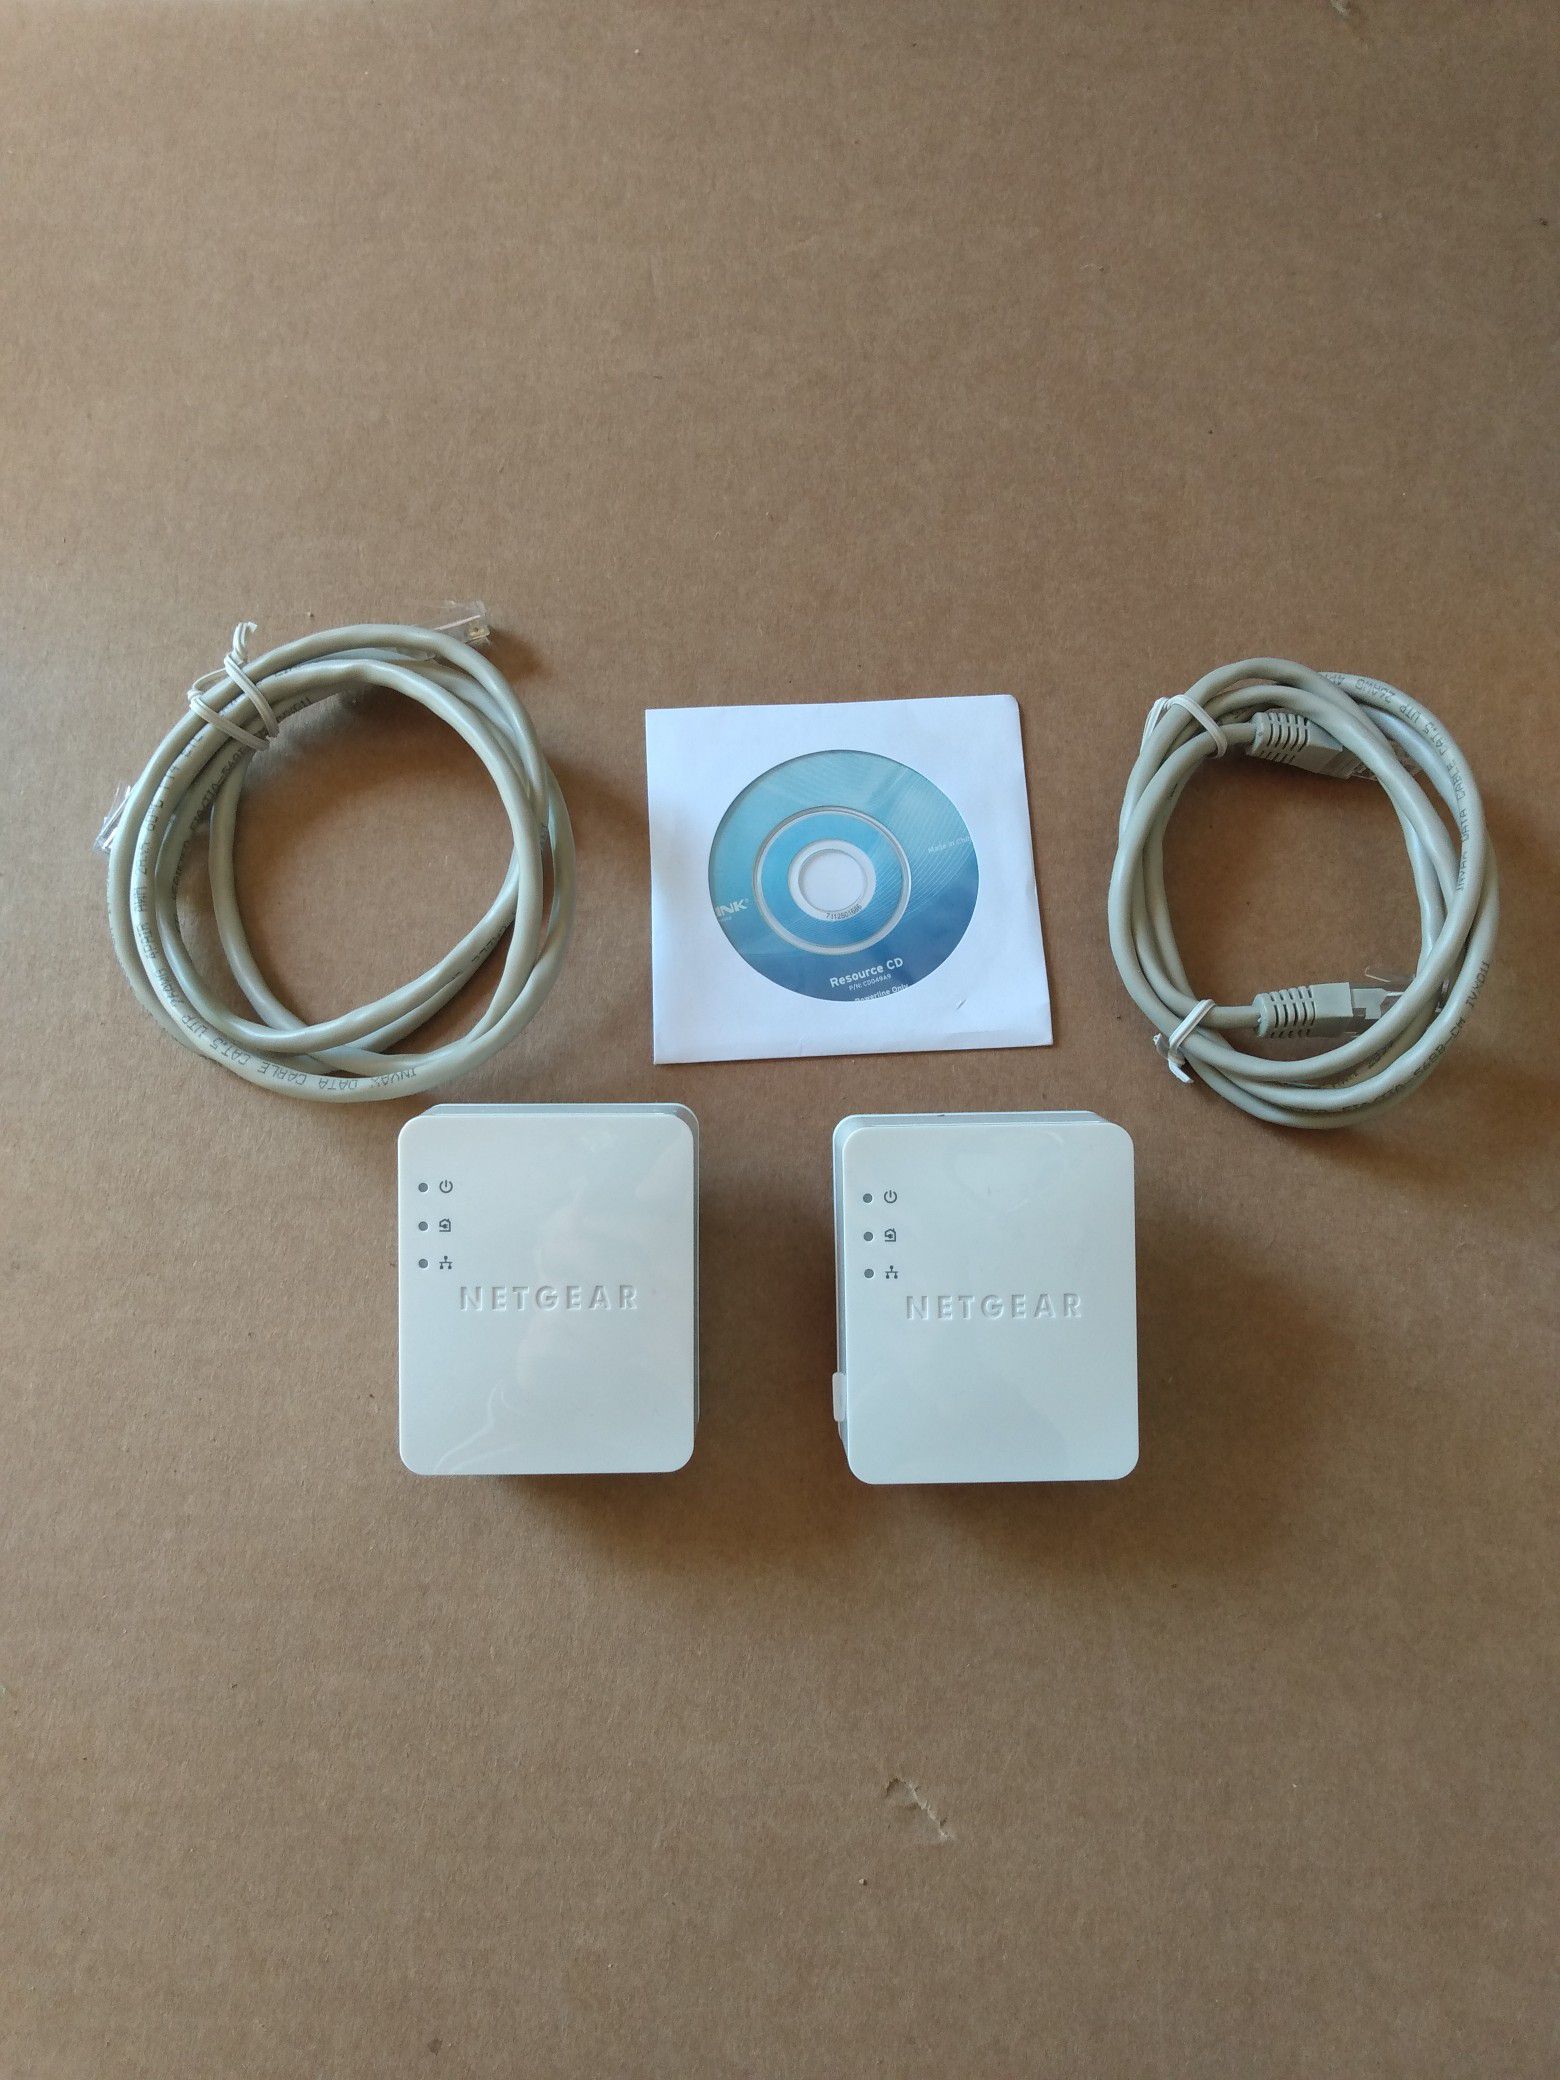 Netgear AC Ethernet adapter kit